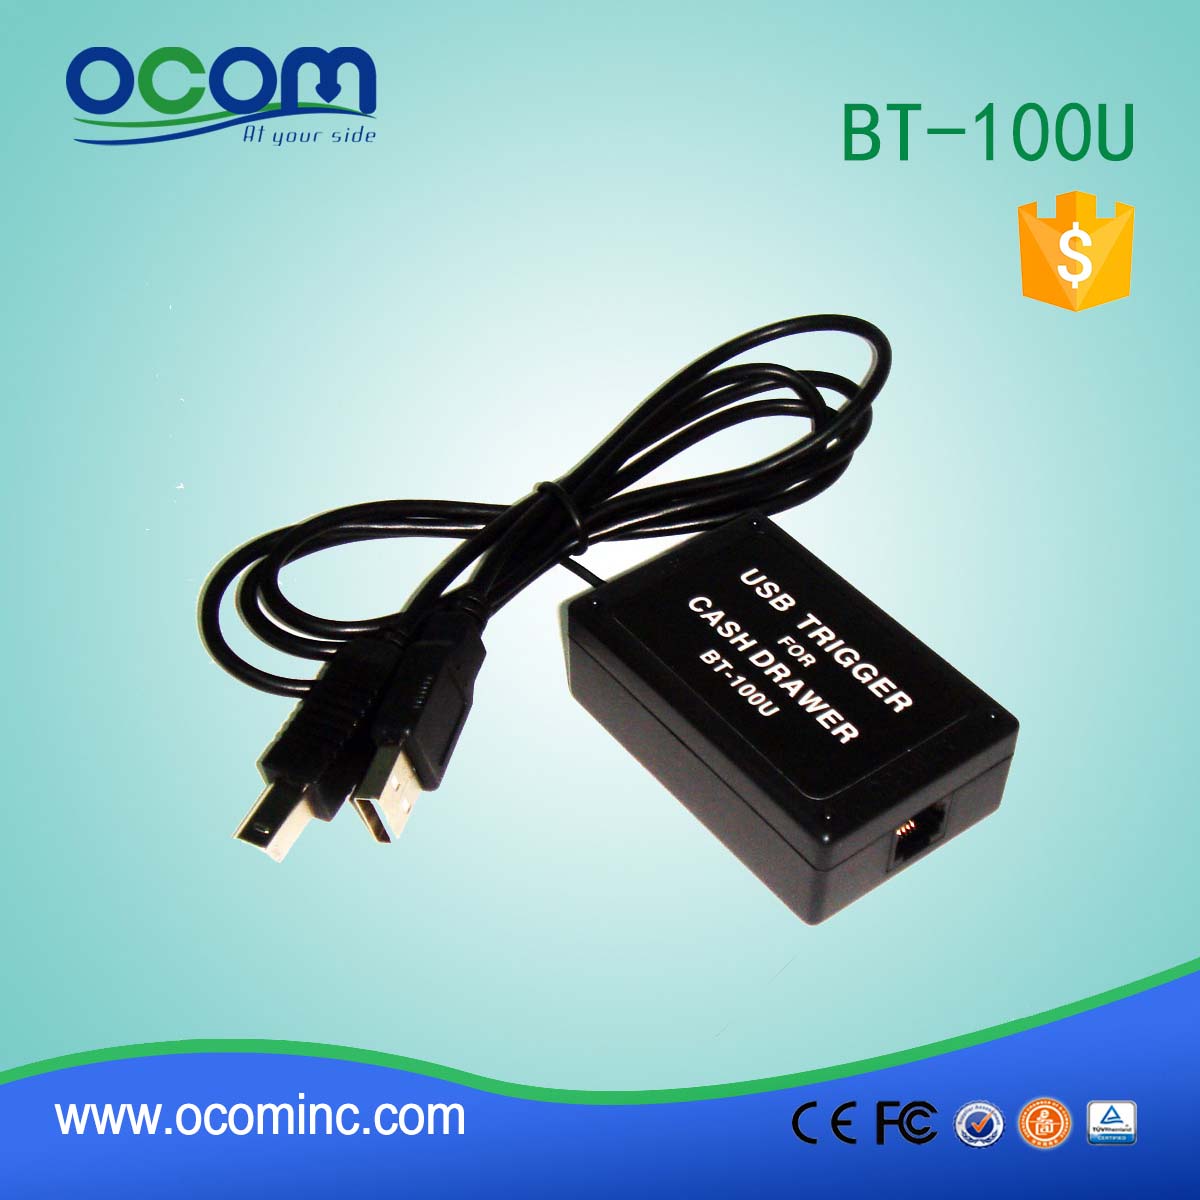 BT-100U Windows Android мини денежный ящик USB триггер RJ11 USB конвертер кабель